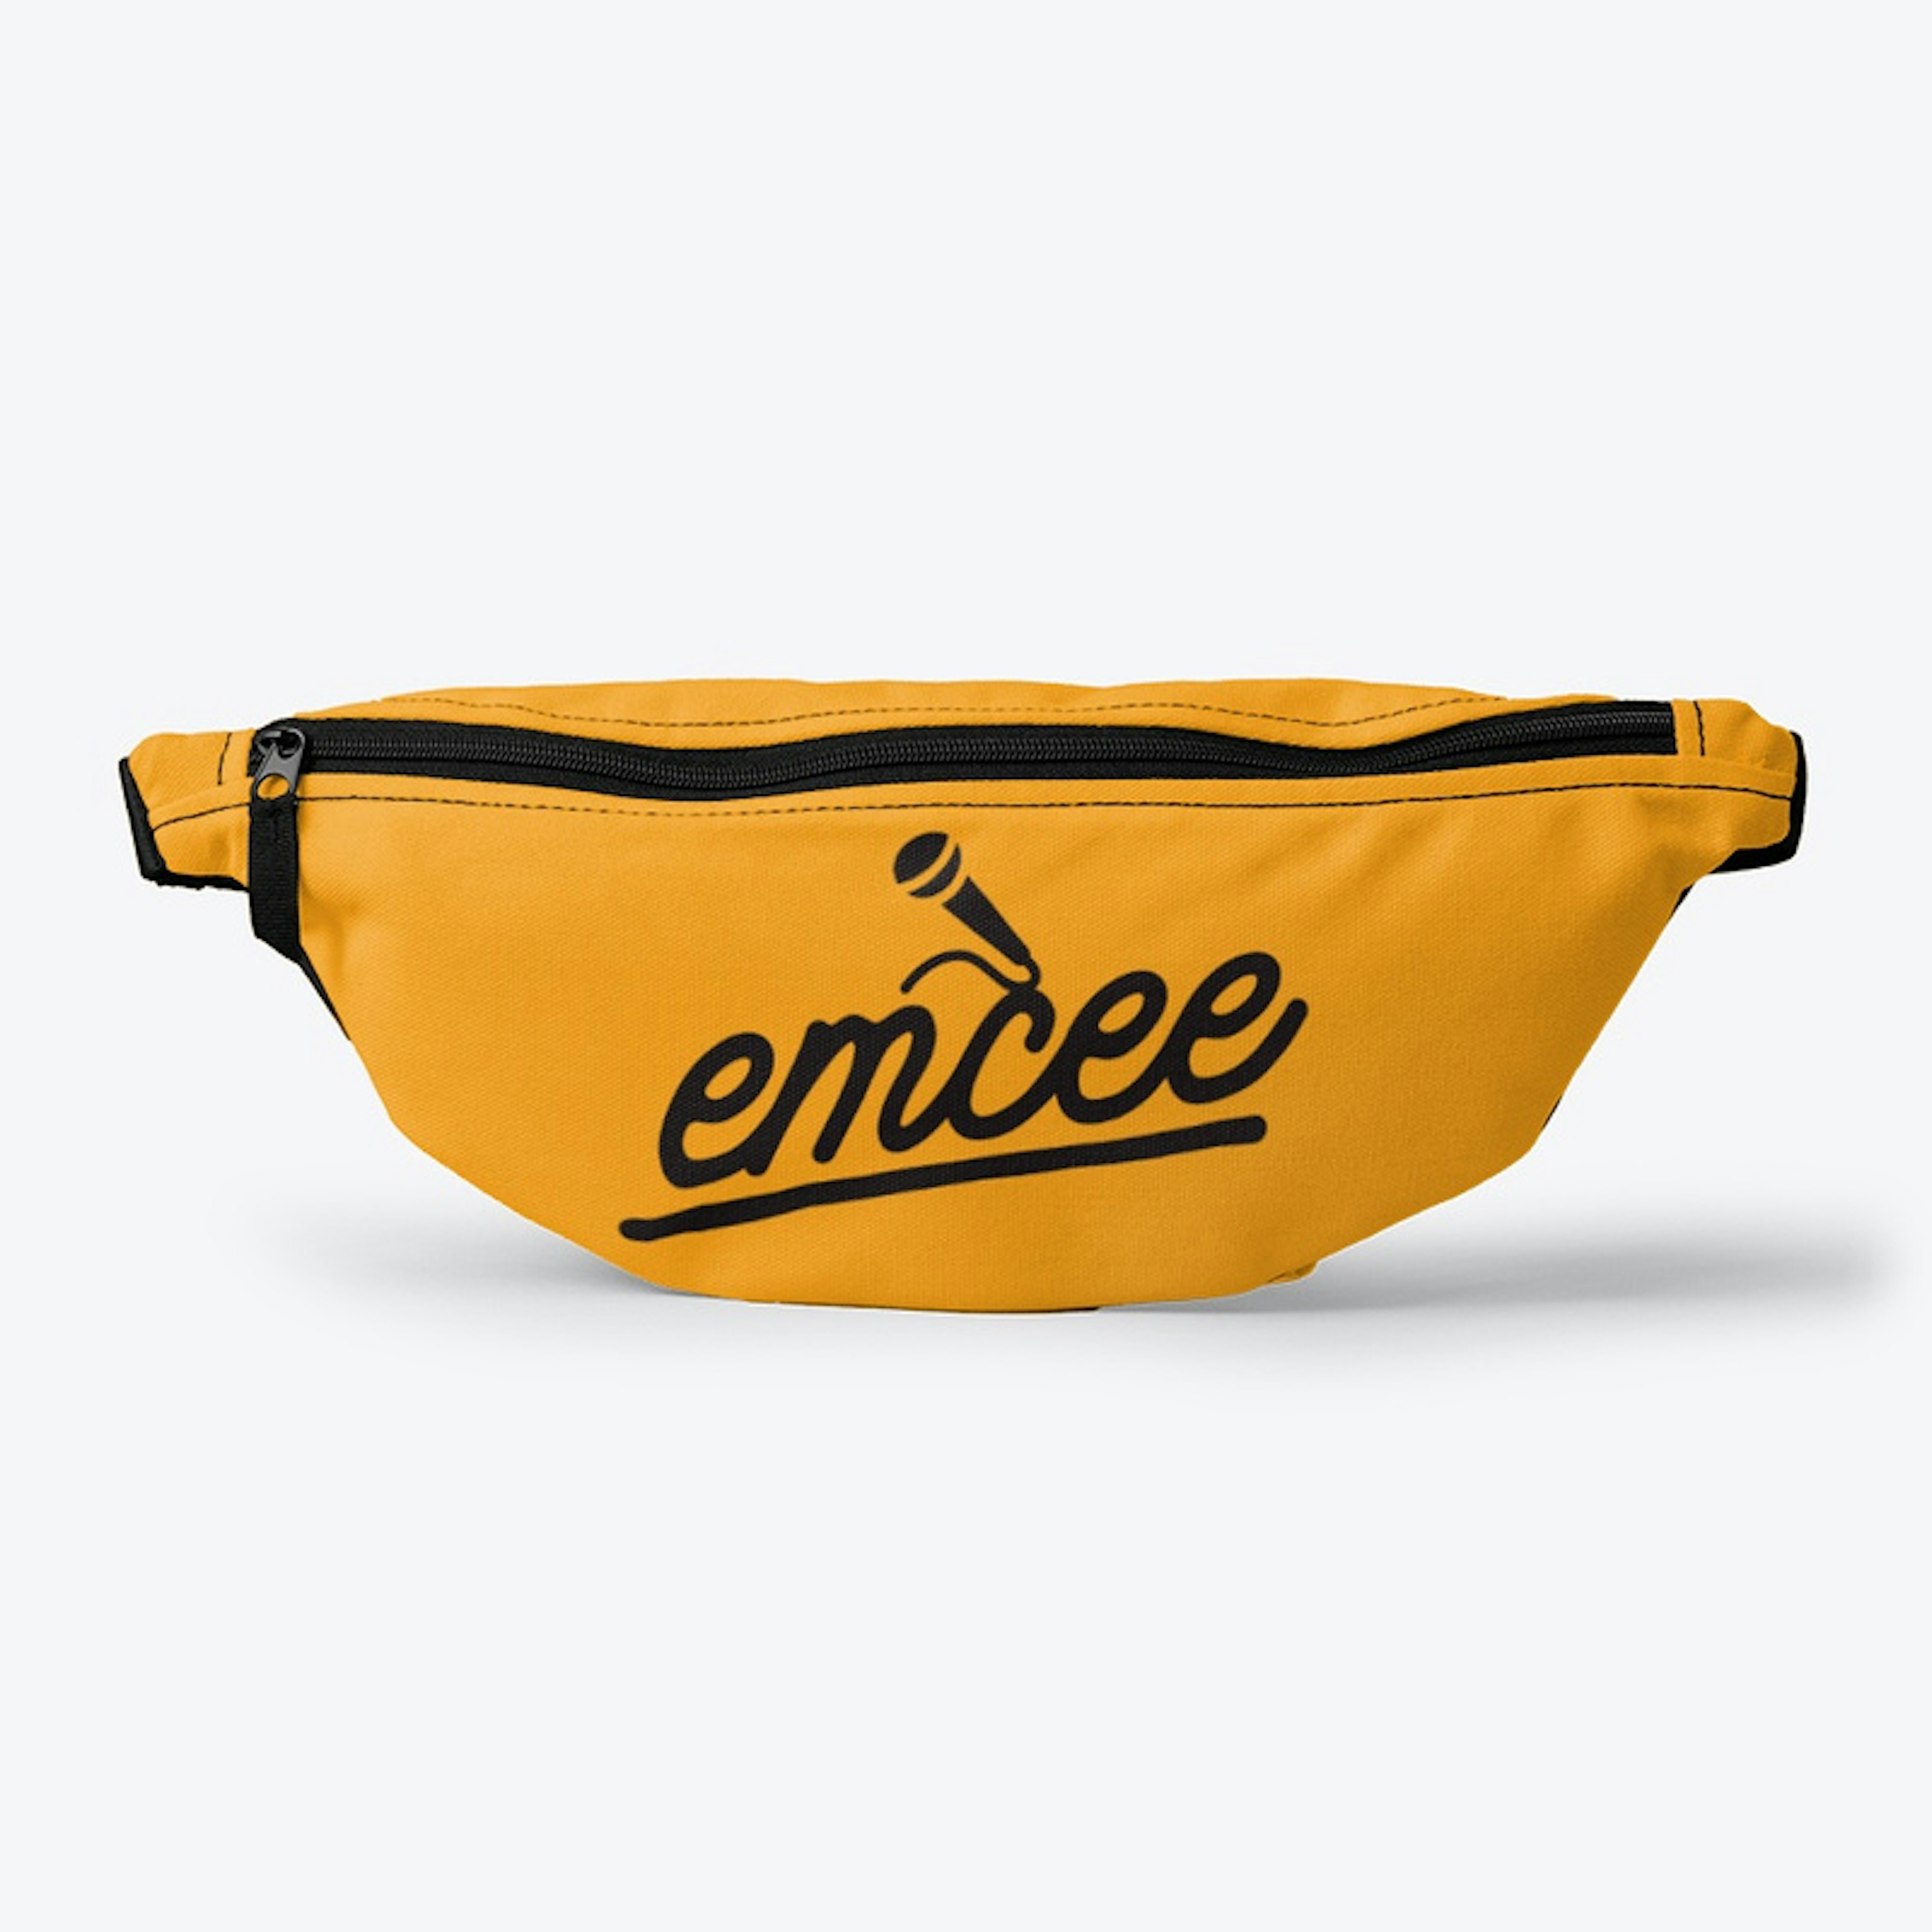 Emcee Brand Apparel & Accessories 